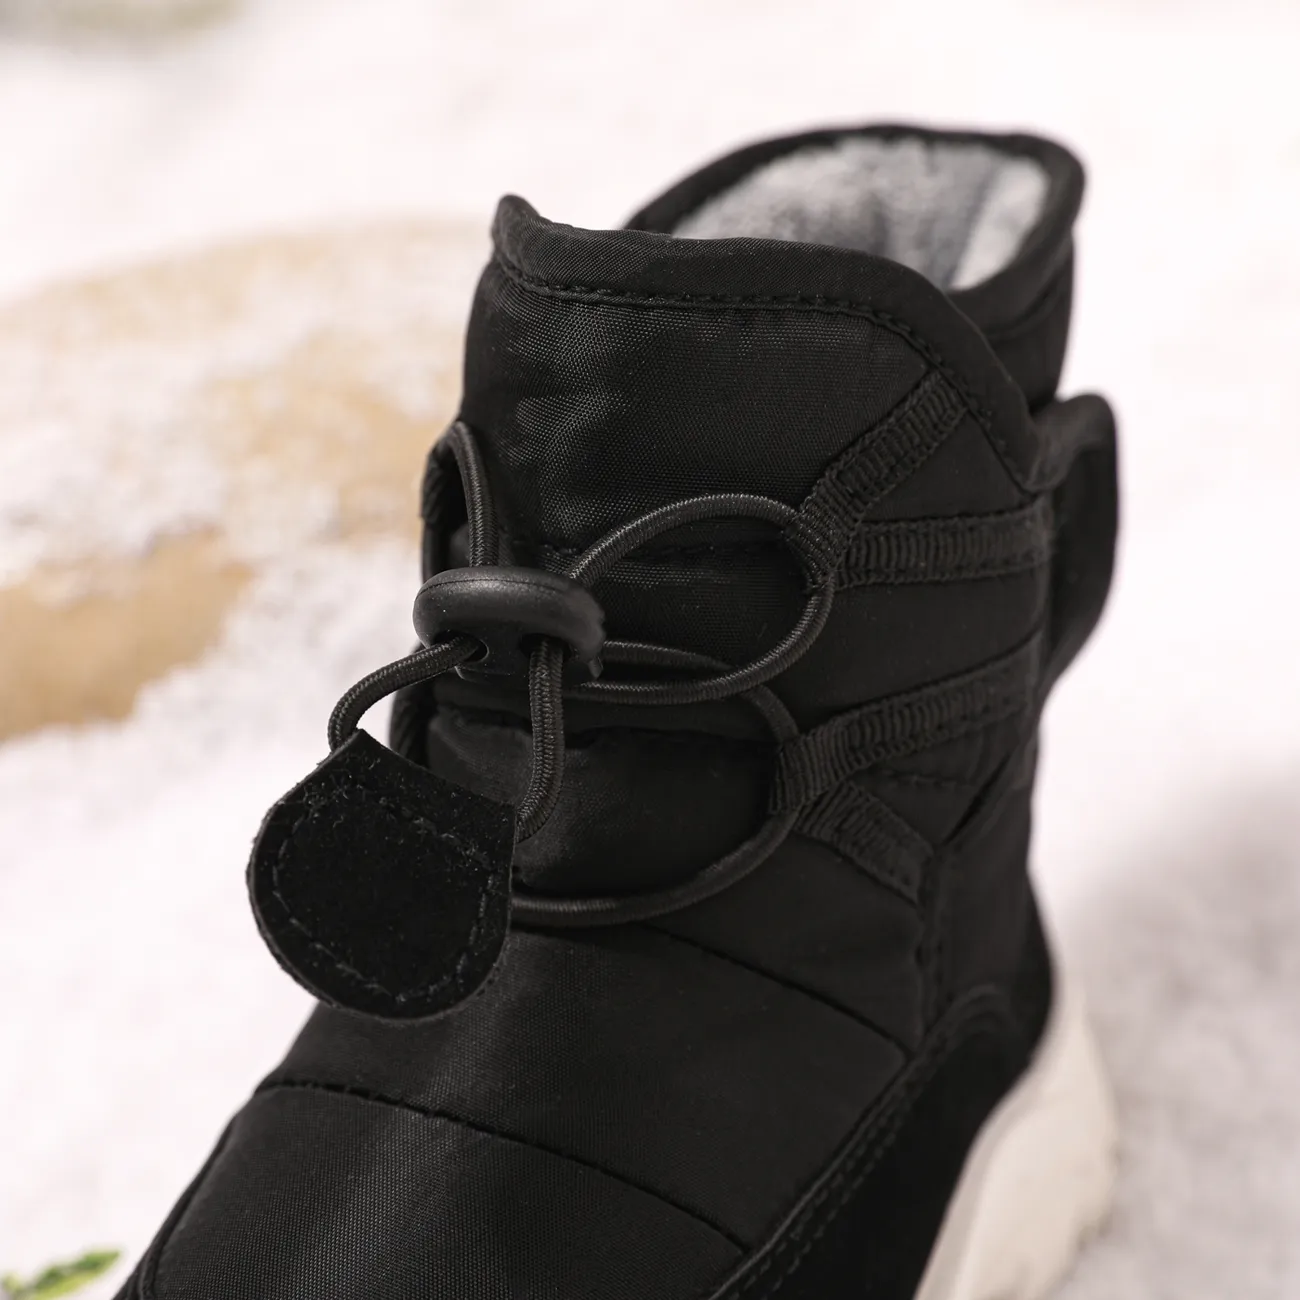 botas de nieve térmicas con forro polar impermeable con cordón para niños pequeños Negro big image 1